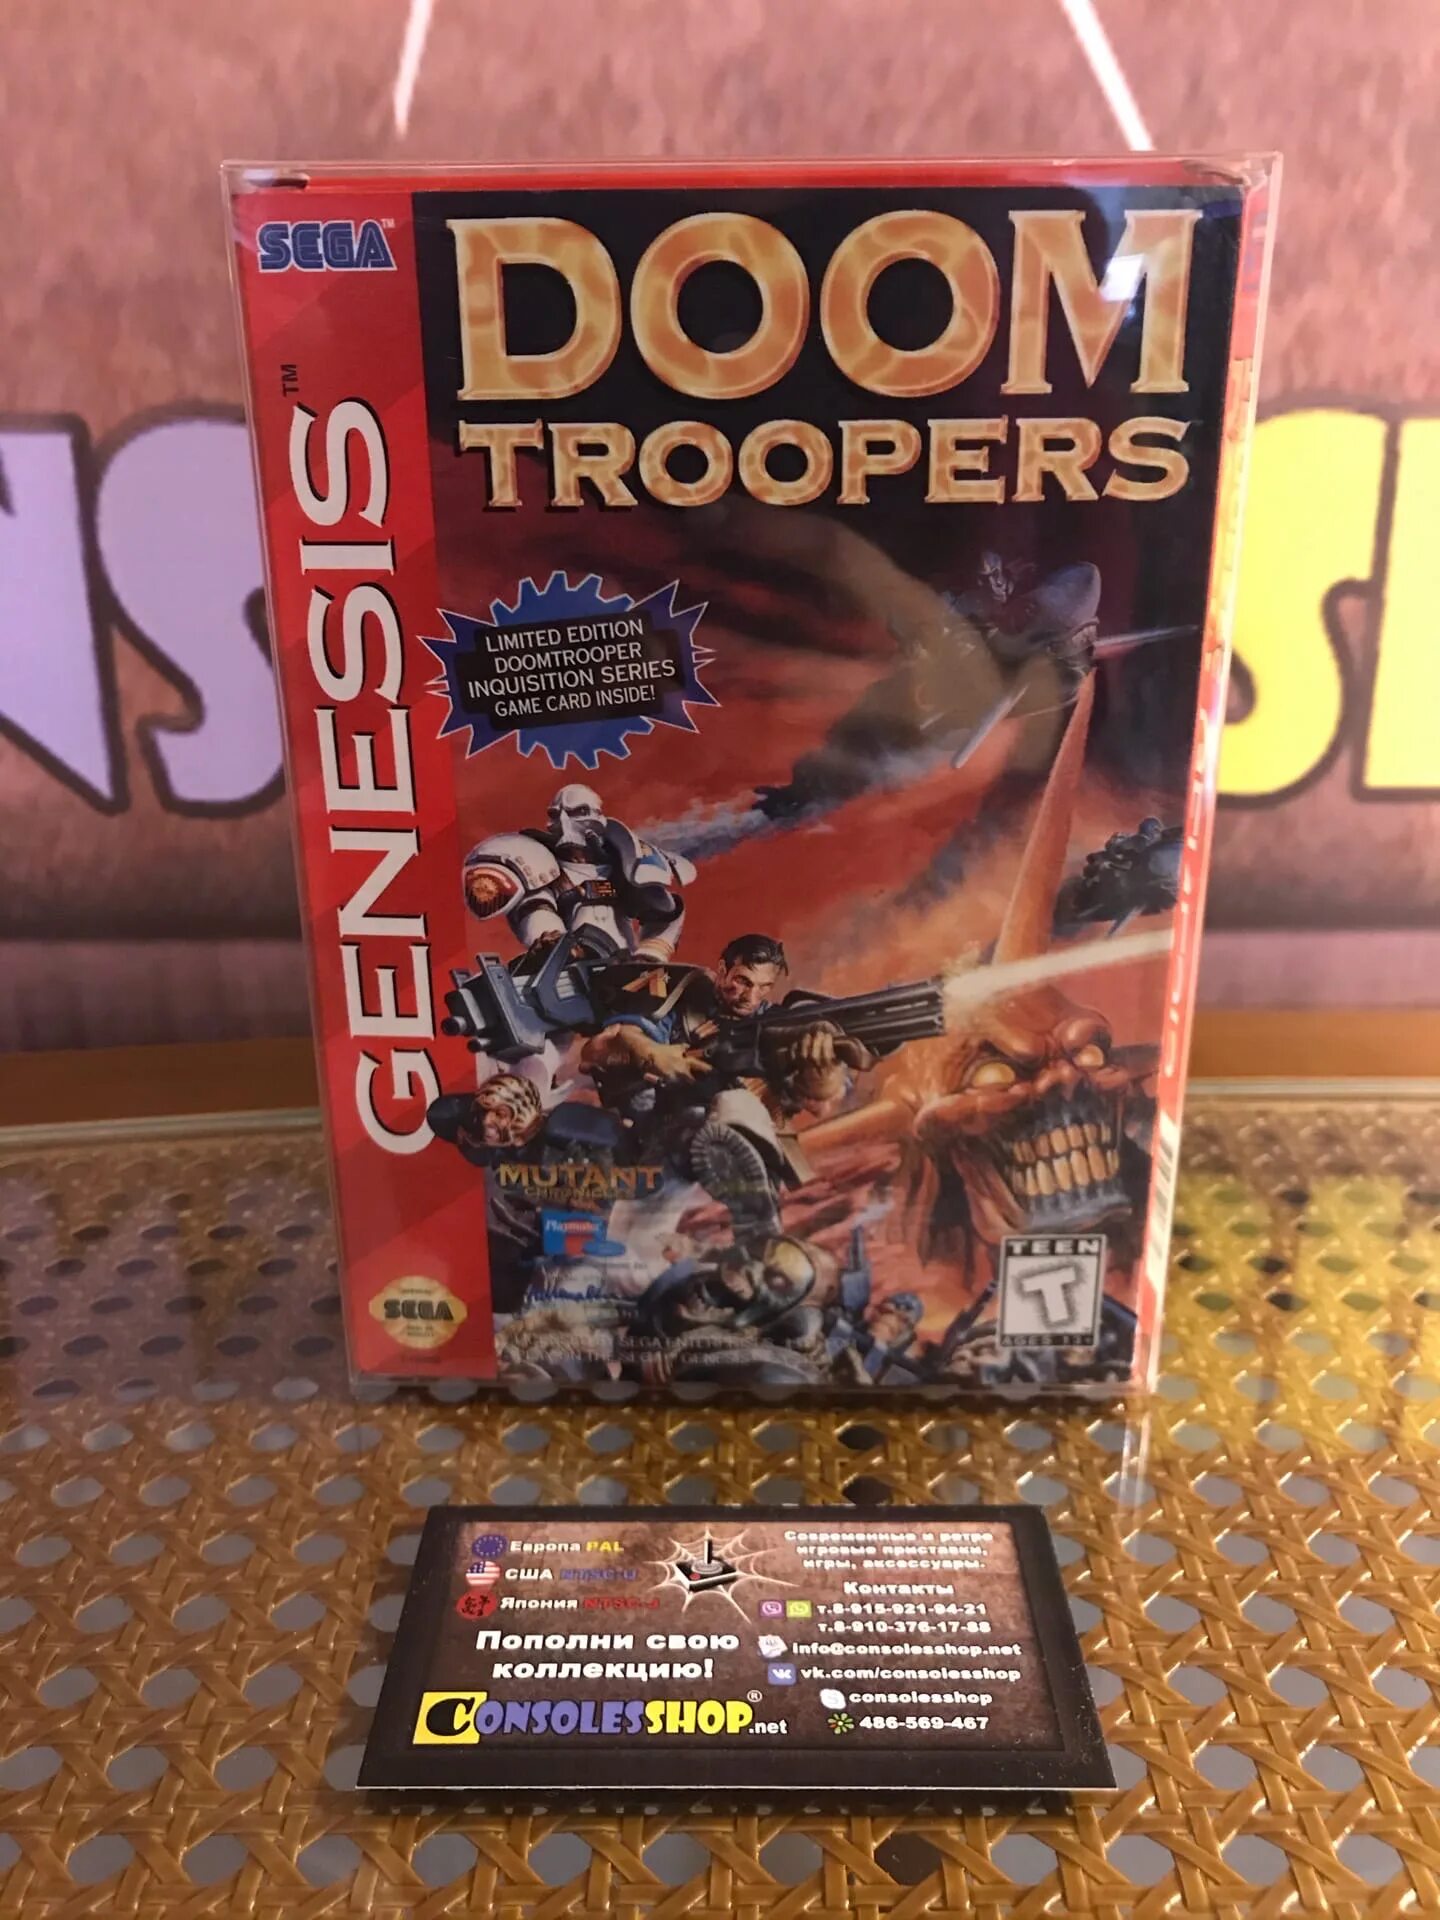 Doom troopers sega. Doom Troopers Sega картридж. Doom Troopers the Mutant Chronicles Sega. Обложка игры Sega Doom Troopers. Дум троперс на сеге.